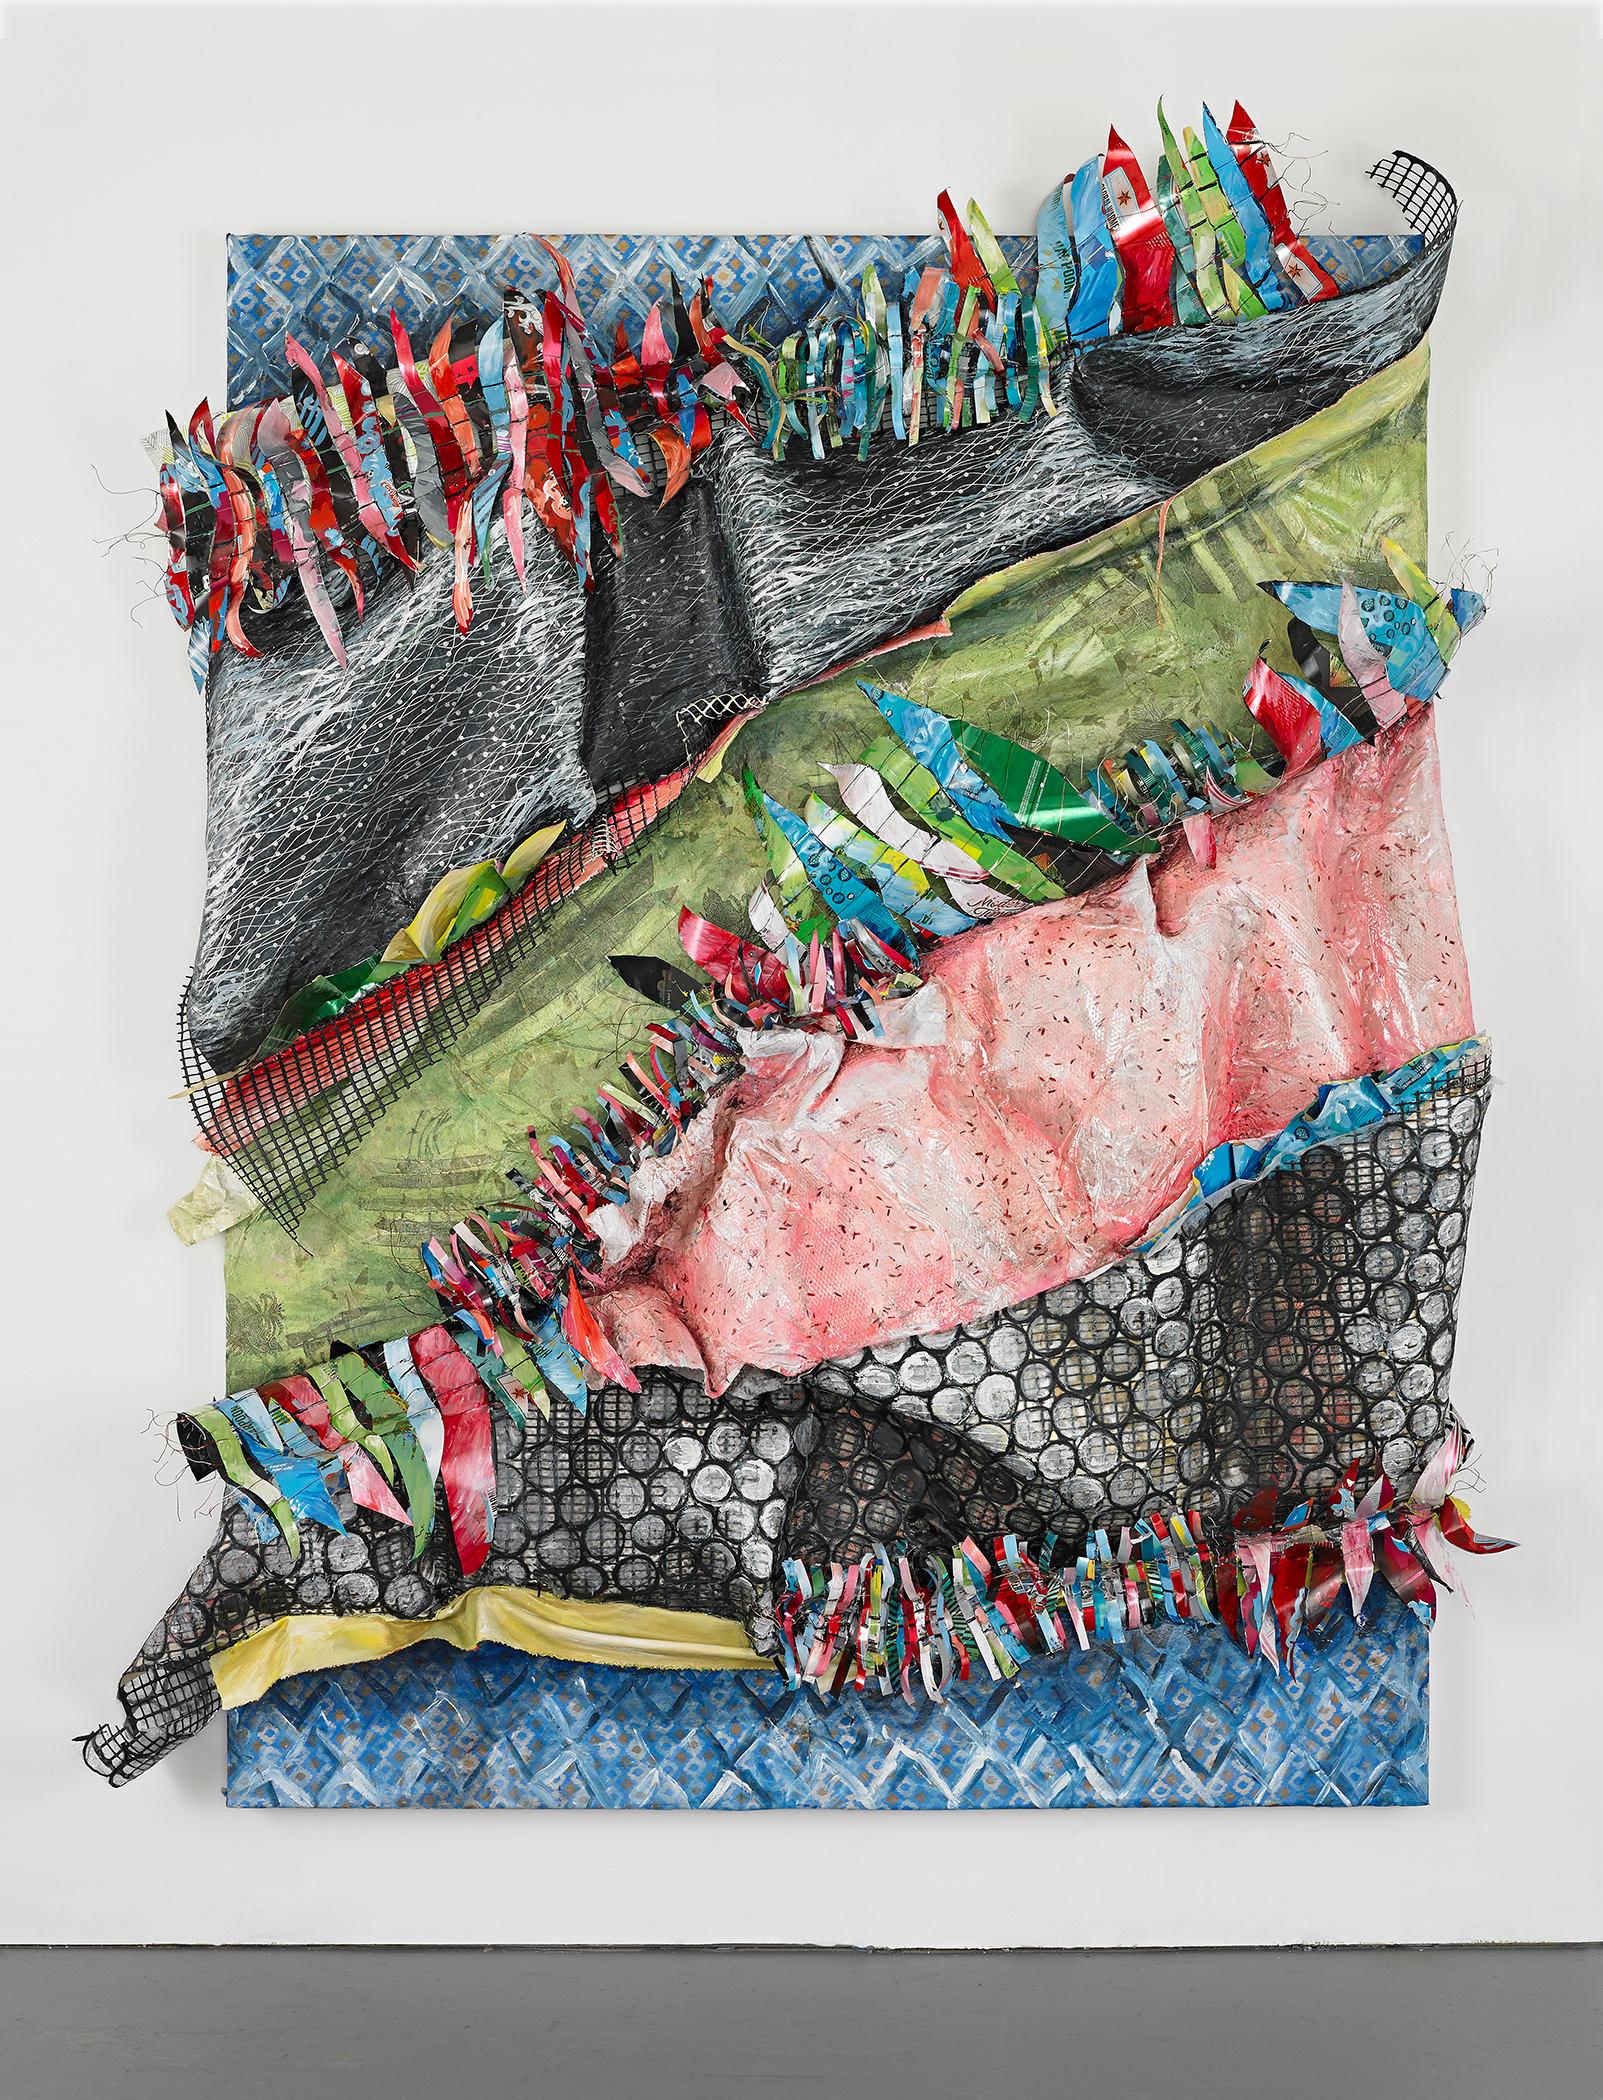 Christina Massey Abstract Painting - Large textural sculptural organic abstract landscape using repurposed materials